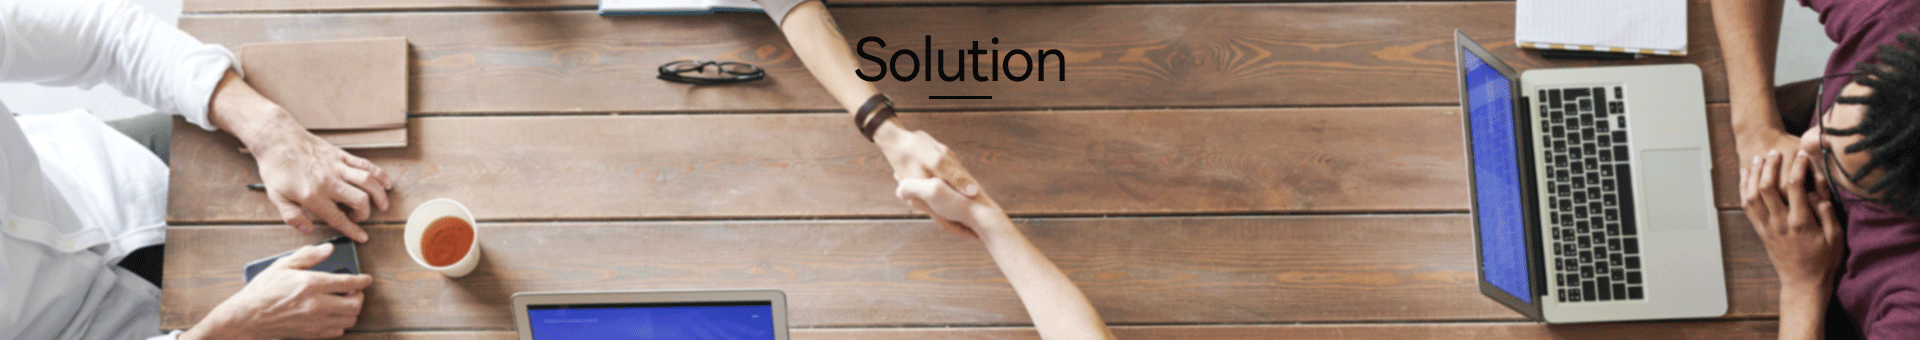 Solution